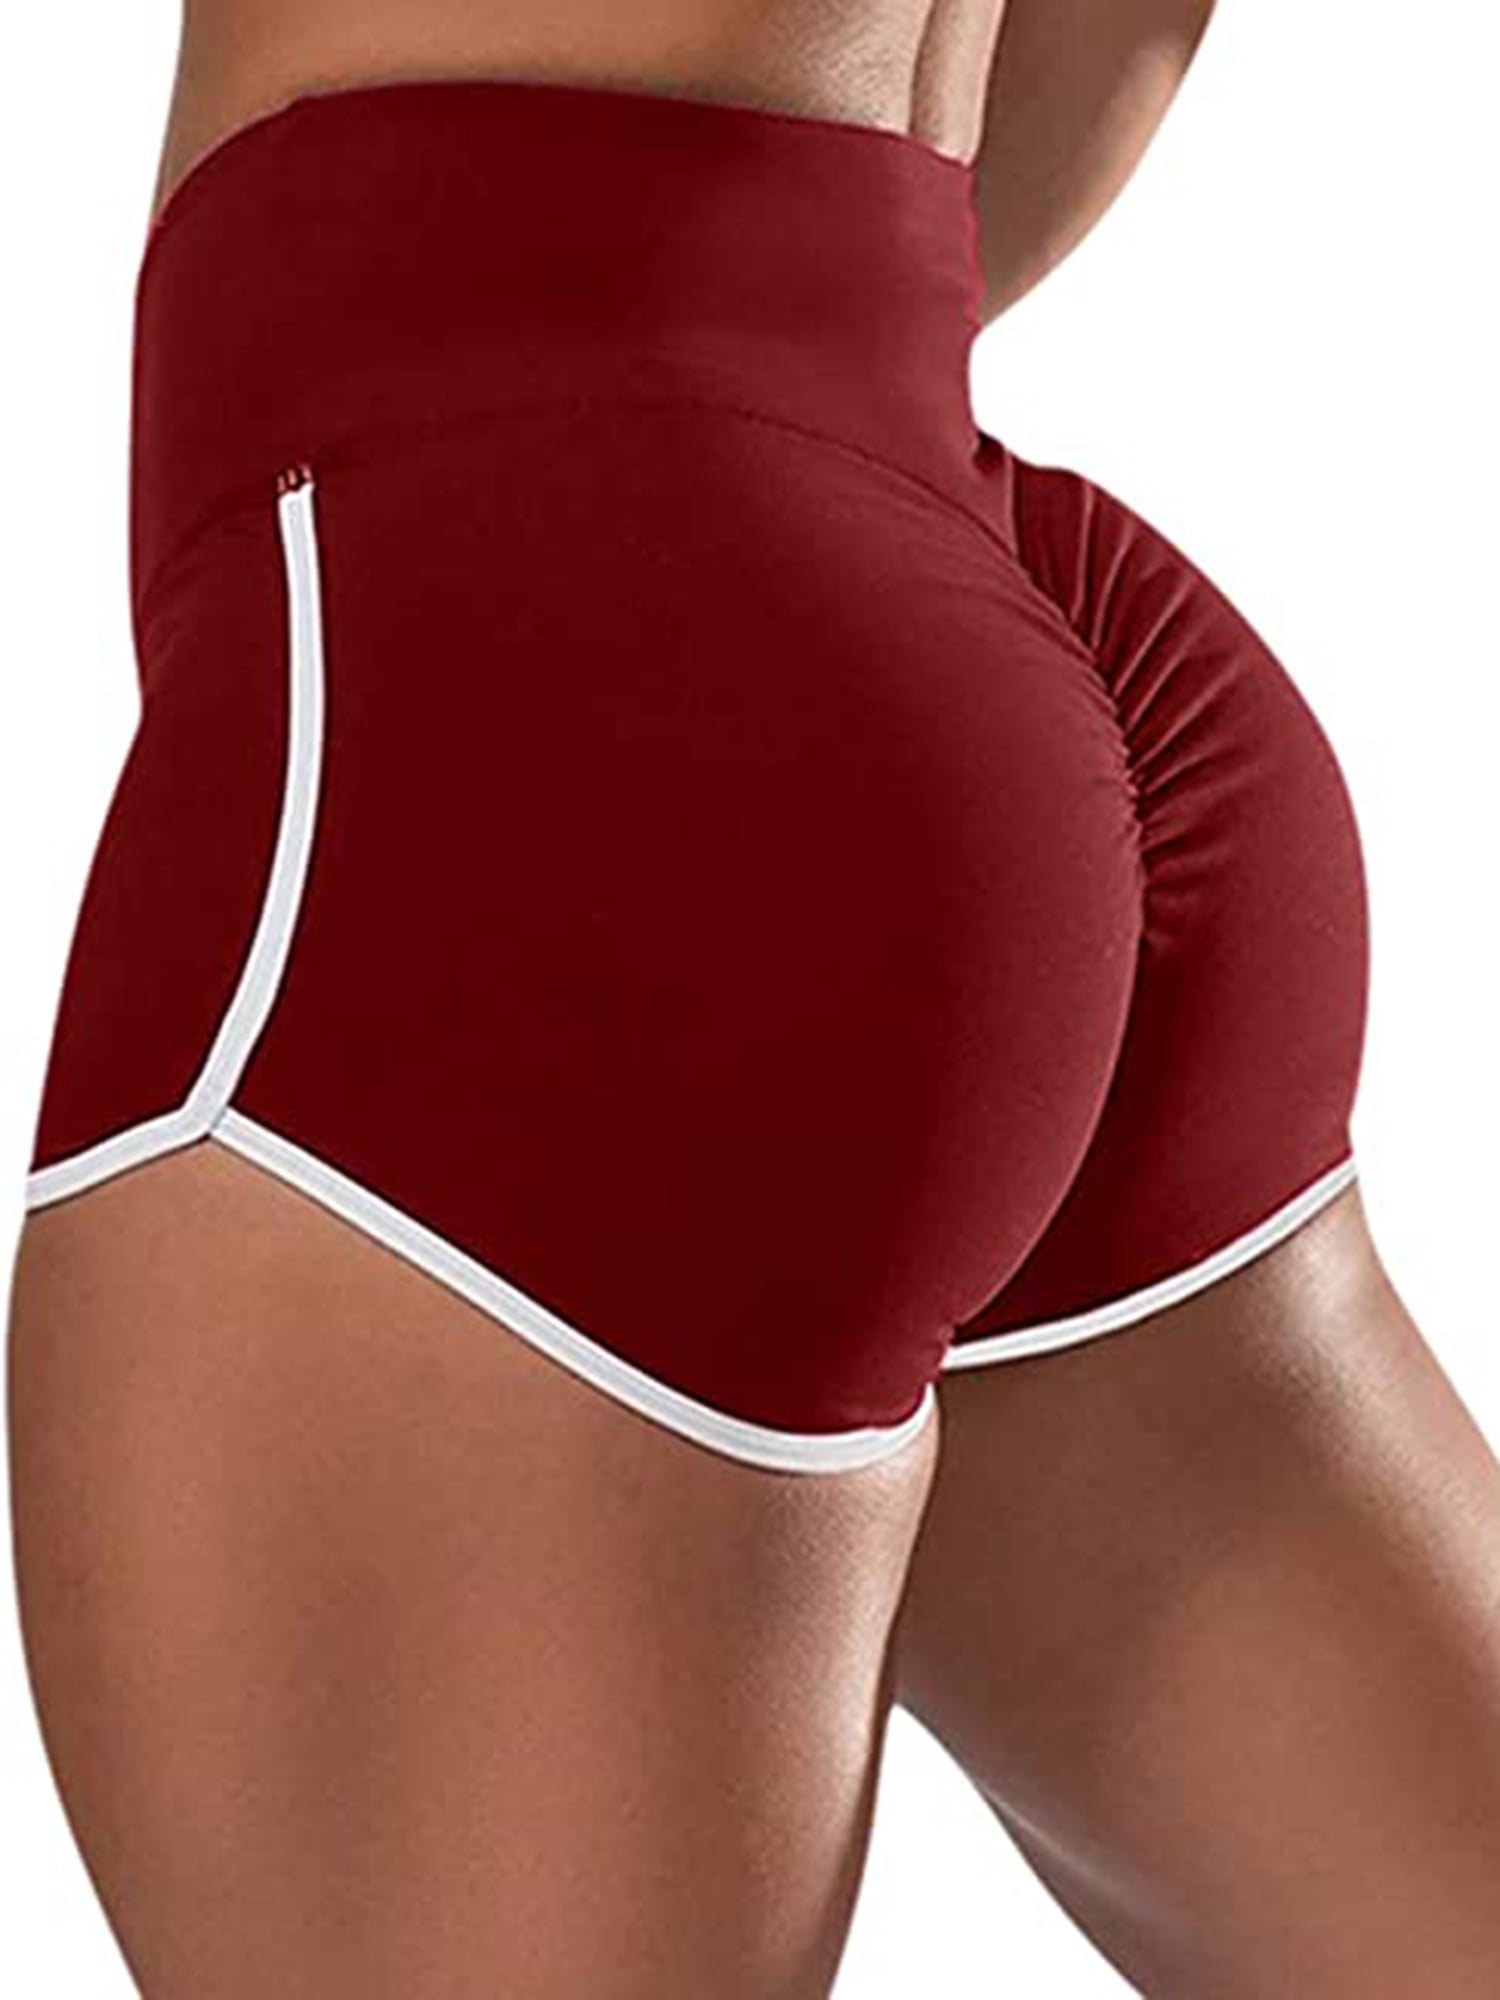 High Quality Work out Scrunch Butt Women Yoga Bike Booty Shorts